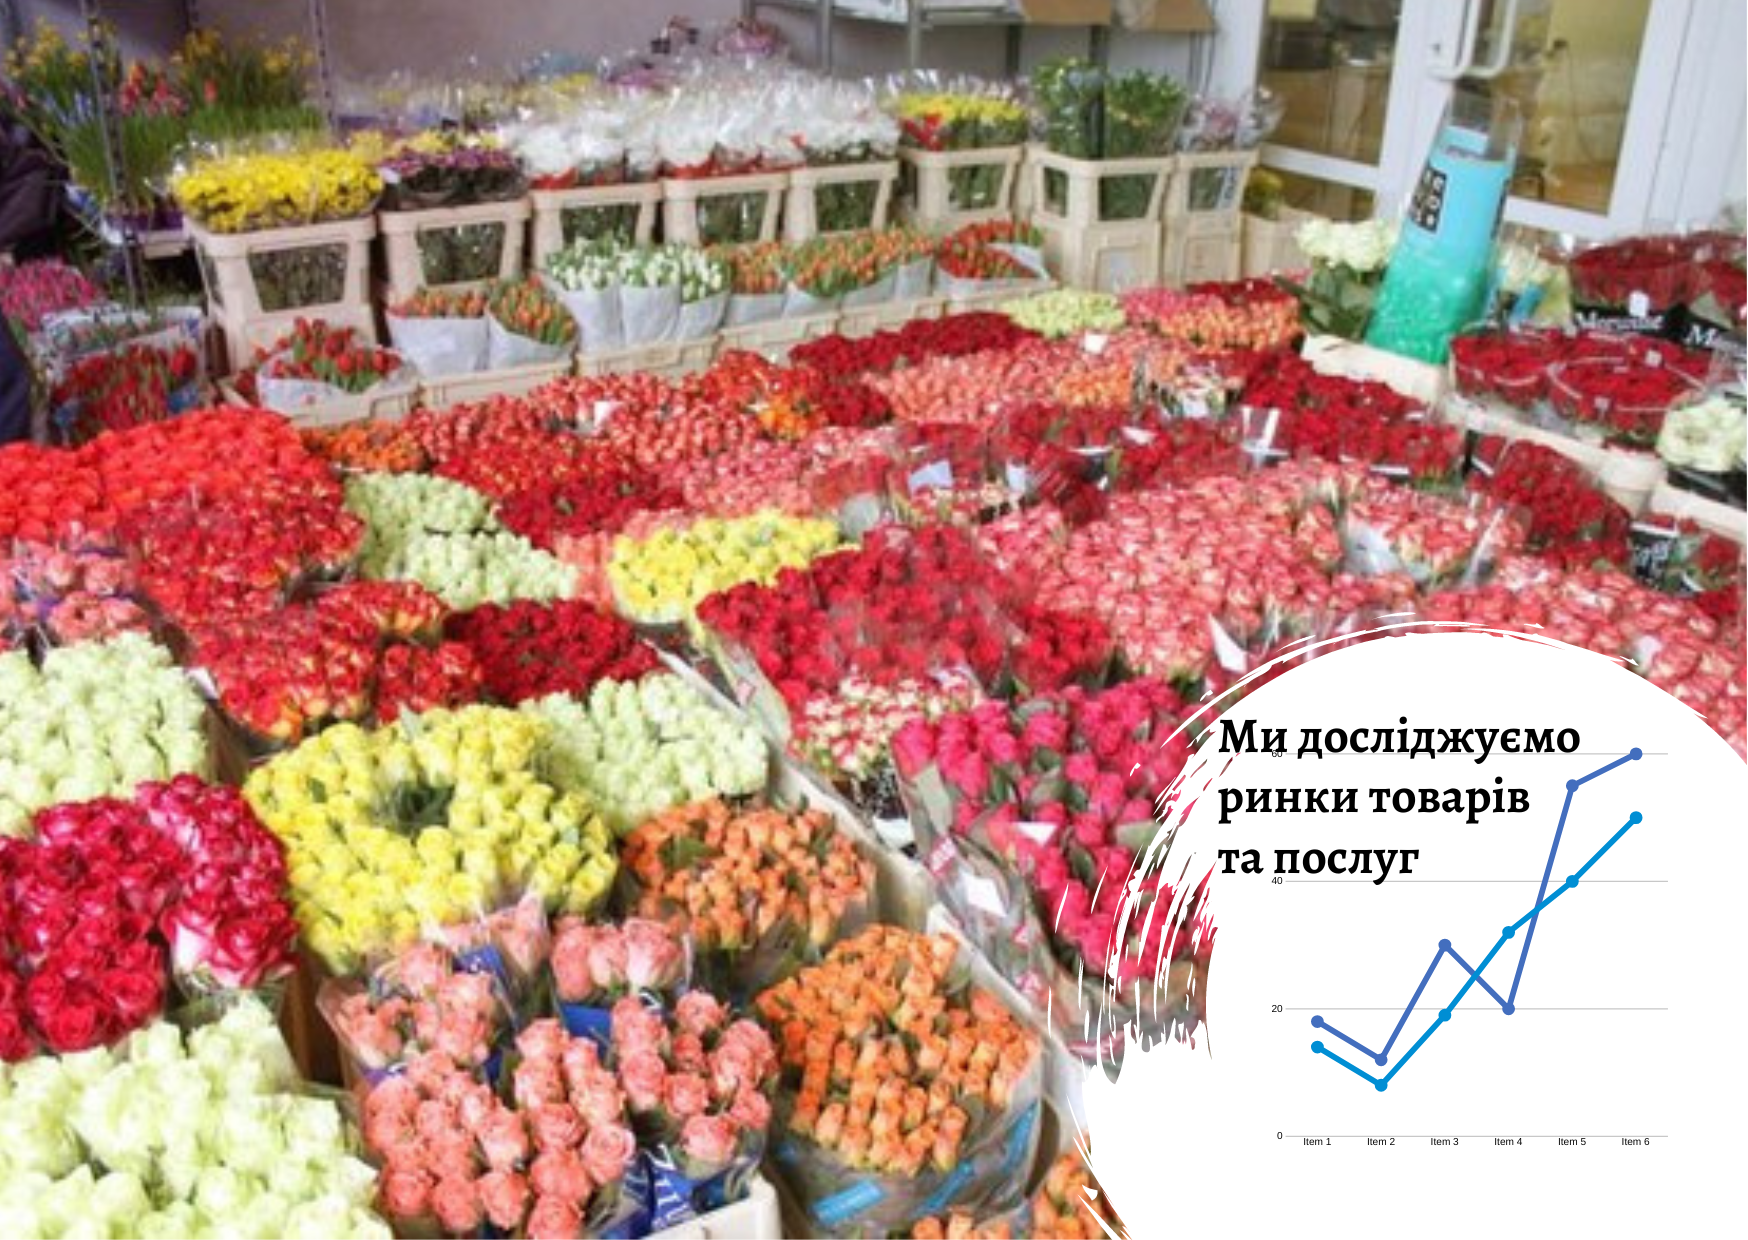 Flower retail market in Lviv: market research report